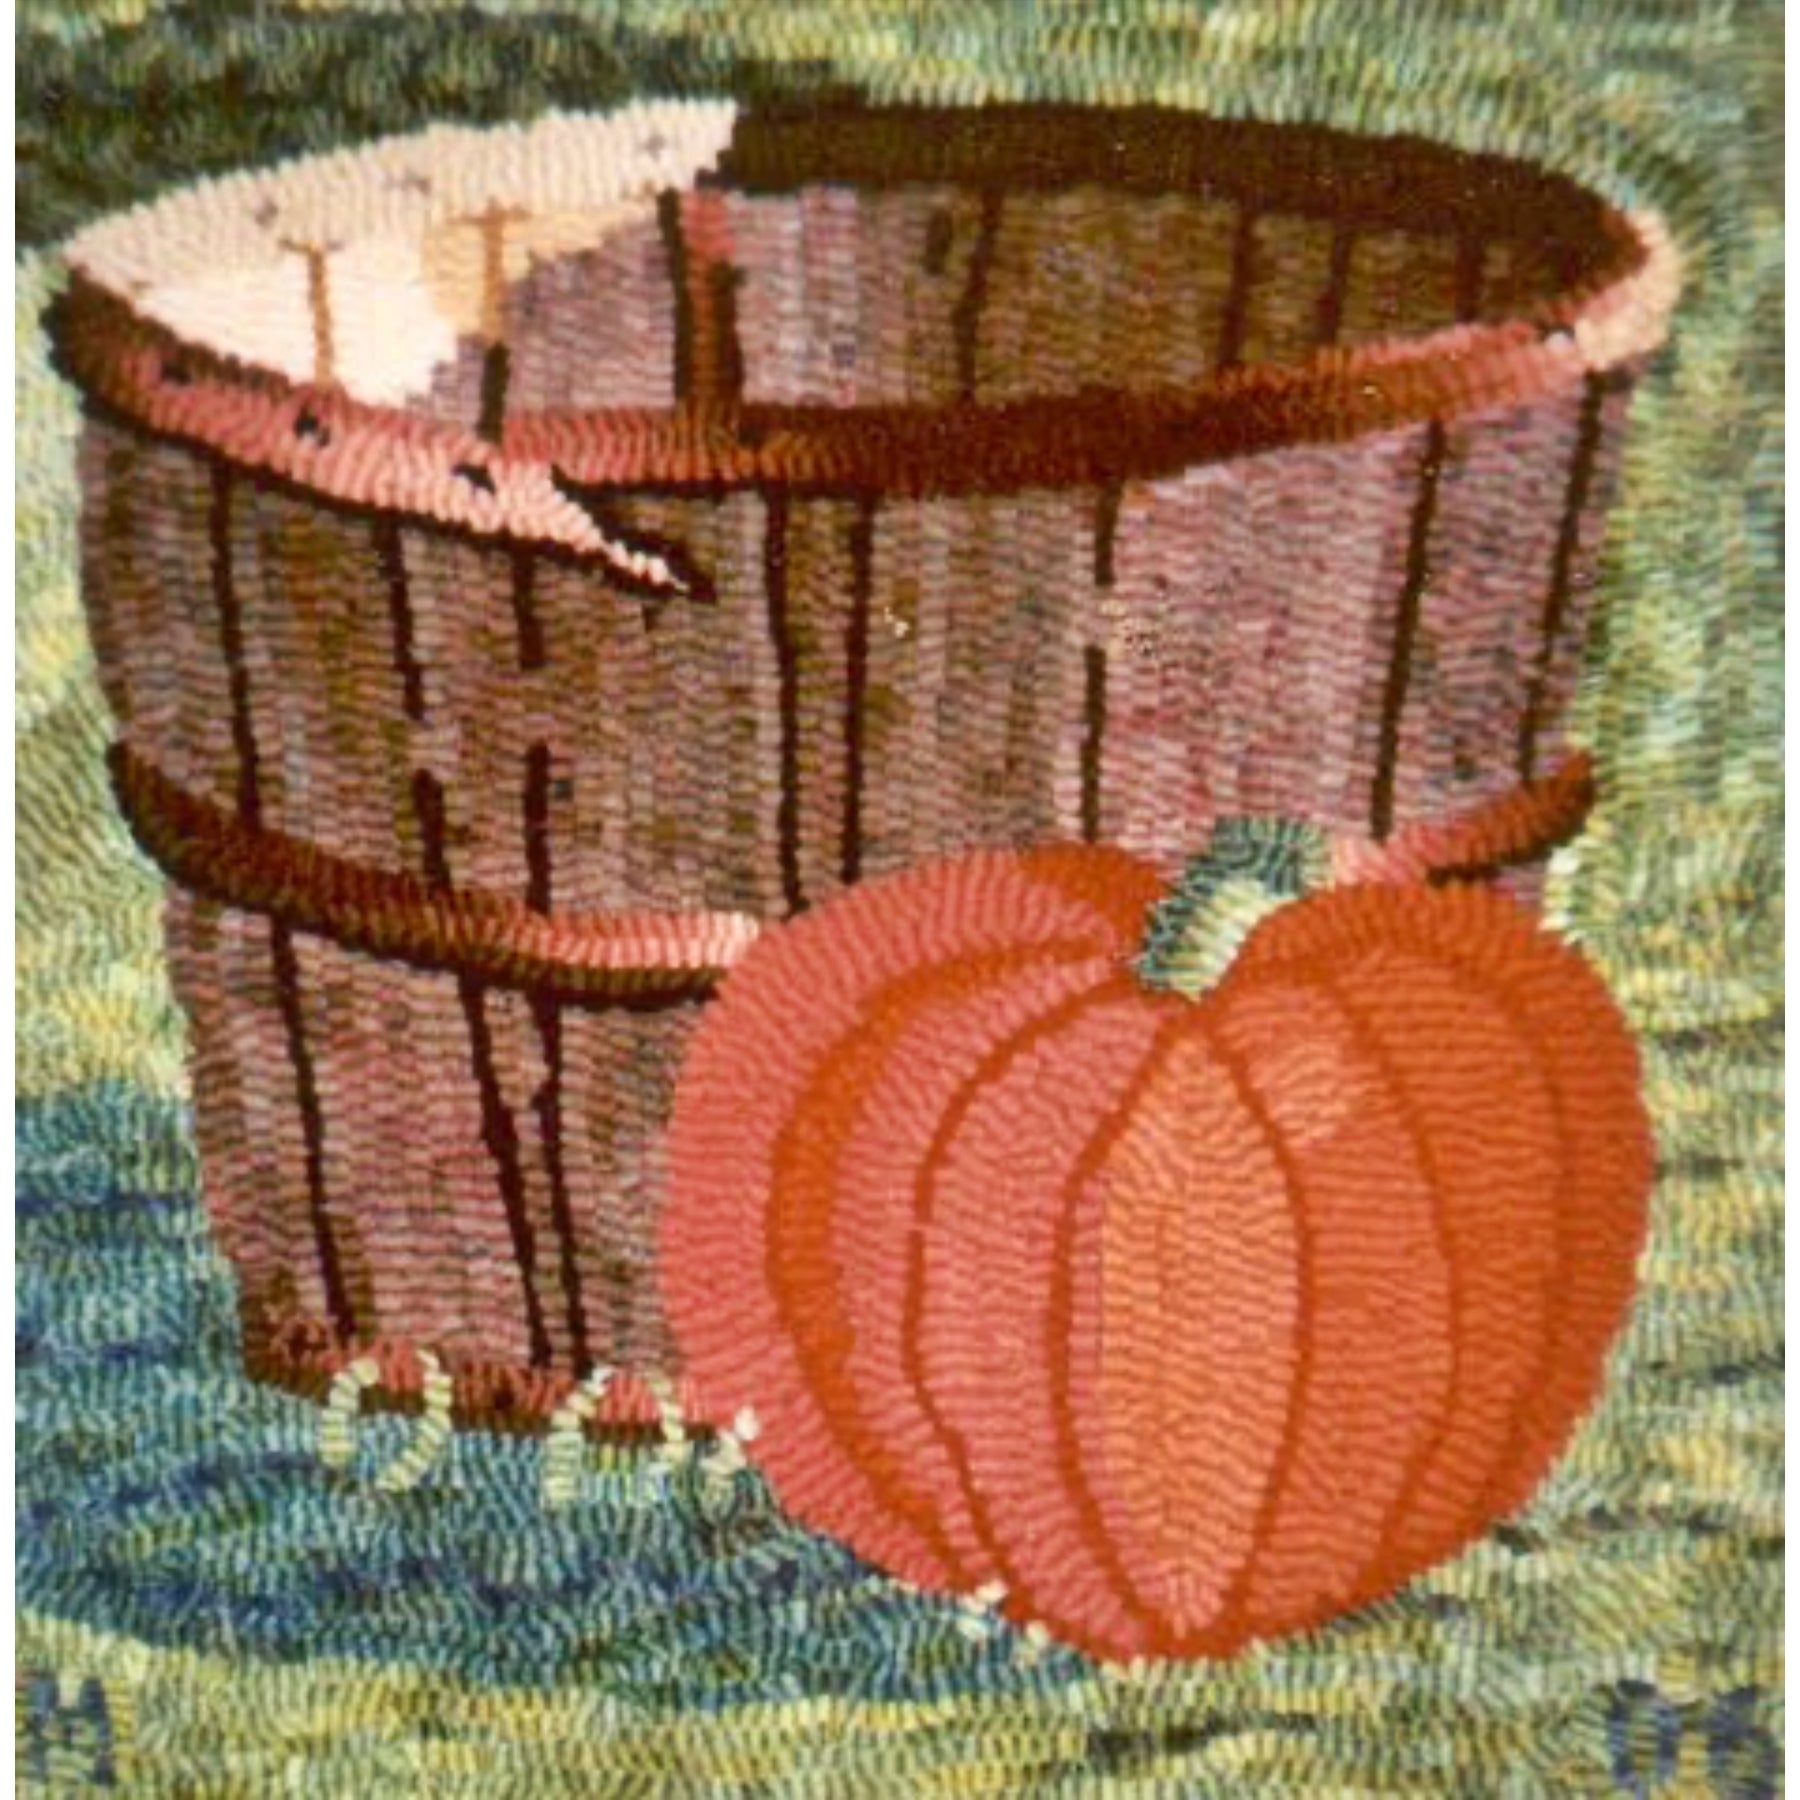 Basket and Pumpkin, rug hooked by Karen Maddox